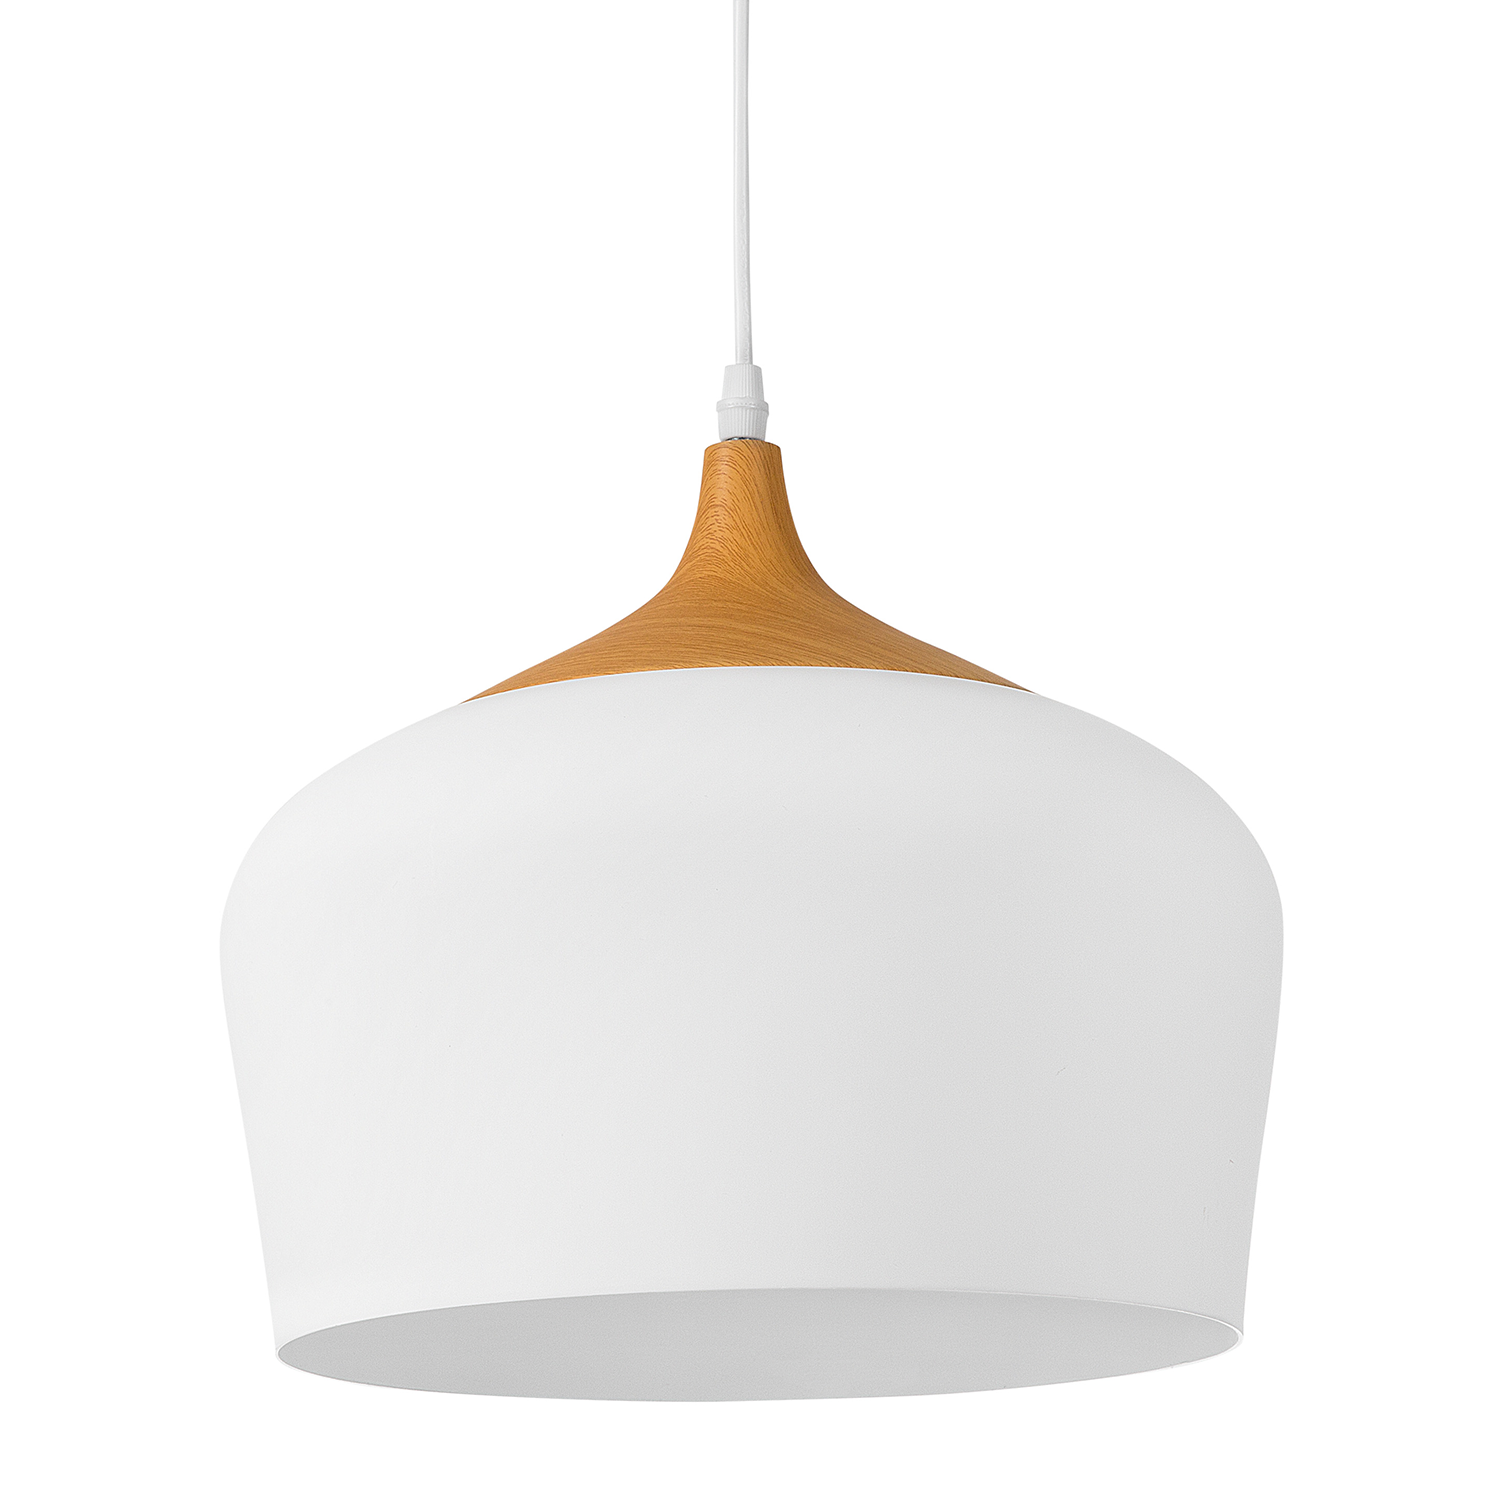 Beliani Hanging Light Pendant Lamp White and Light Wood Aluminium Round Geometric Shade Modern Design